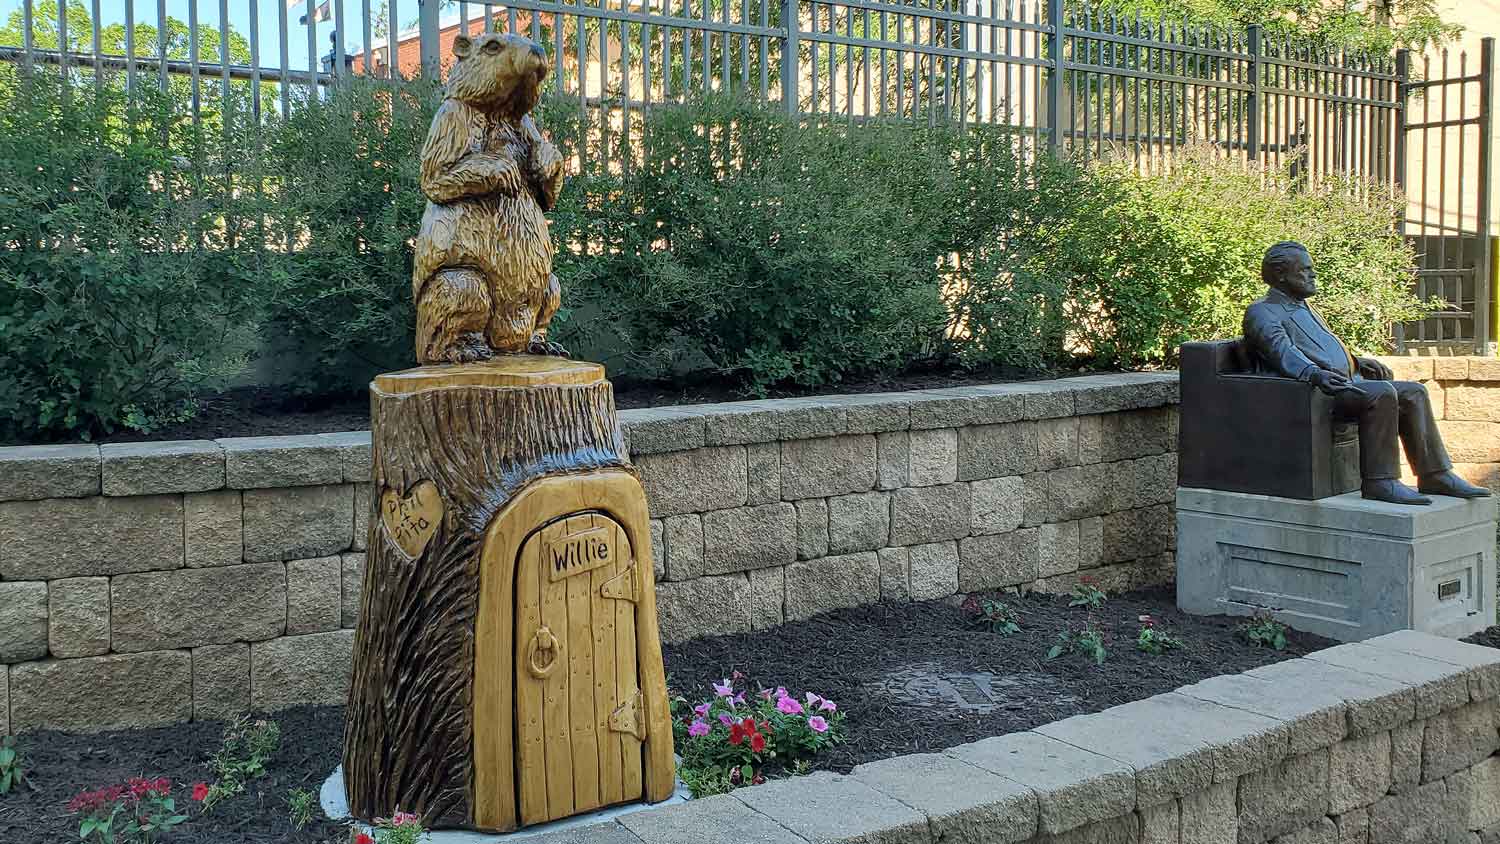 Woodstock Willie wood carving statue in the sculpture garden.